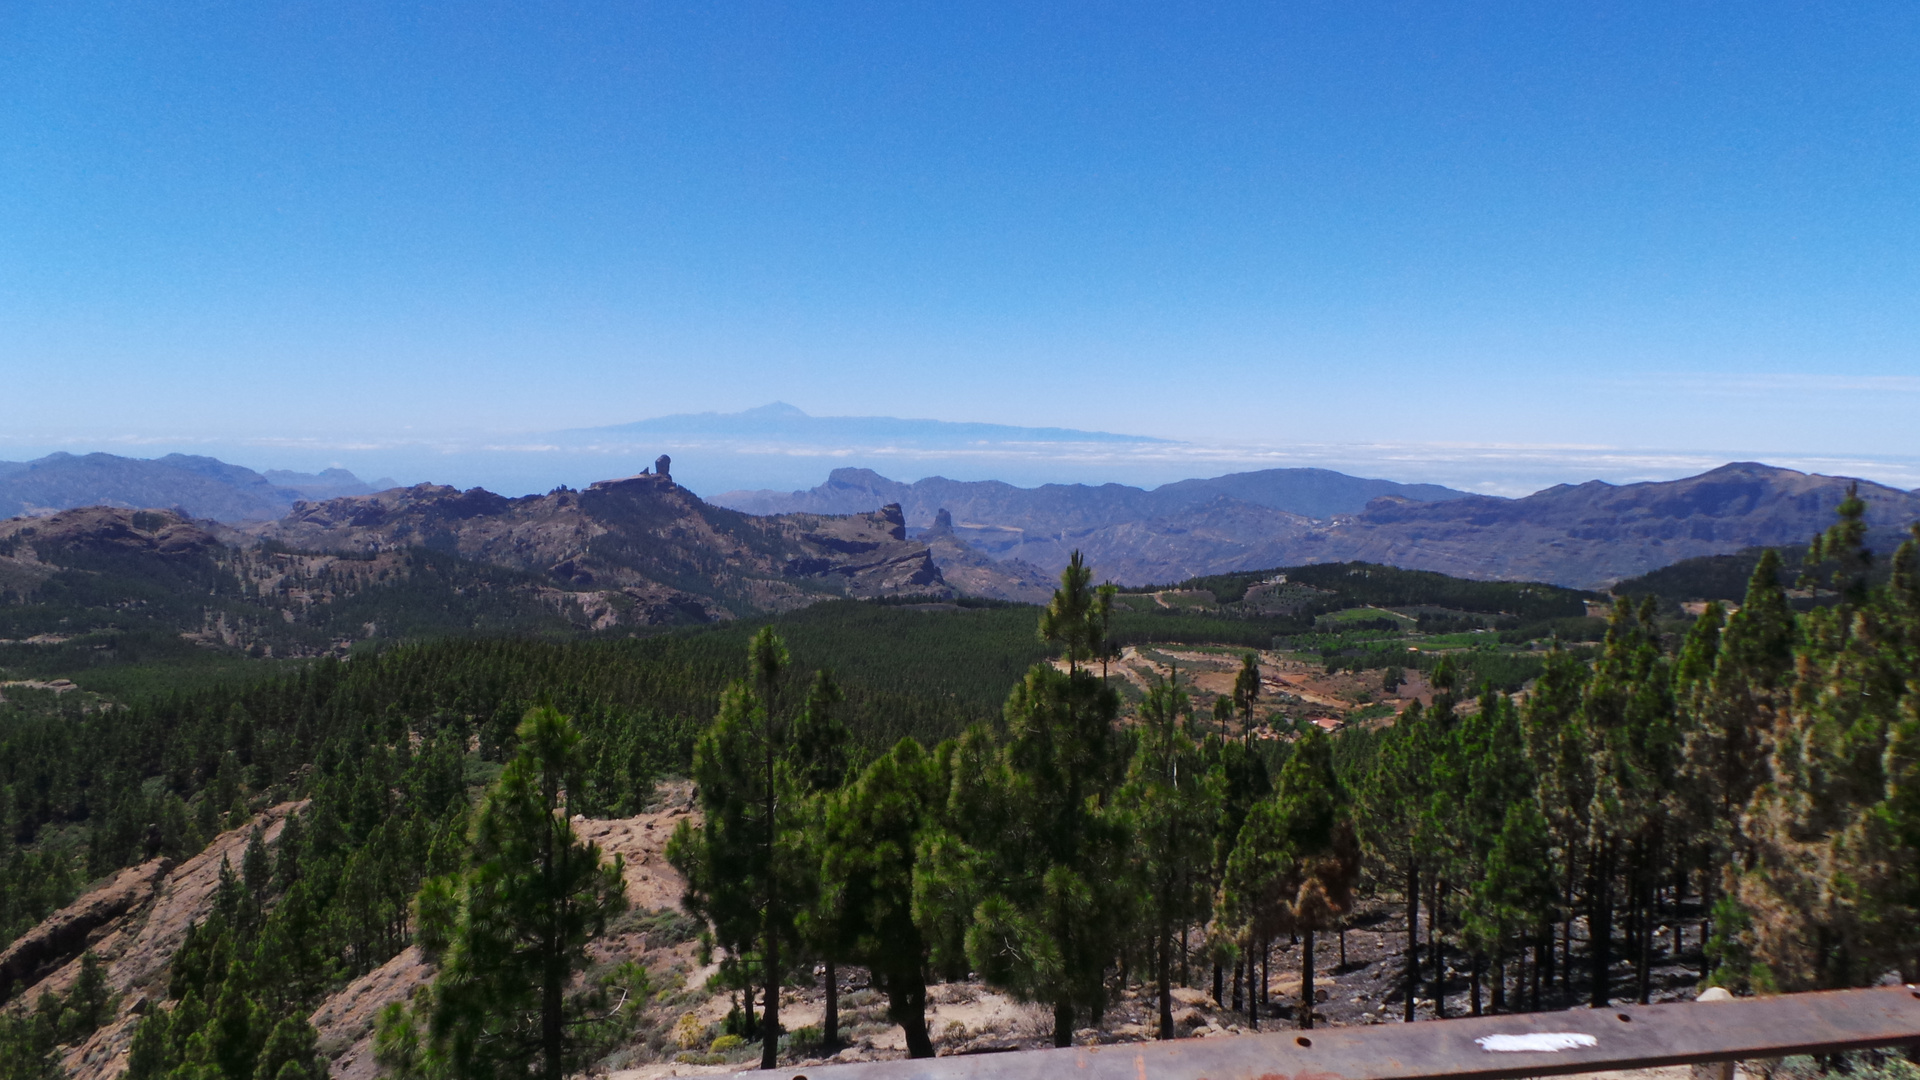 Gran Canaria mit Blick auf Teneriffa